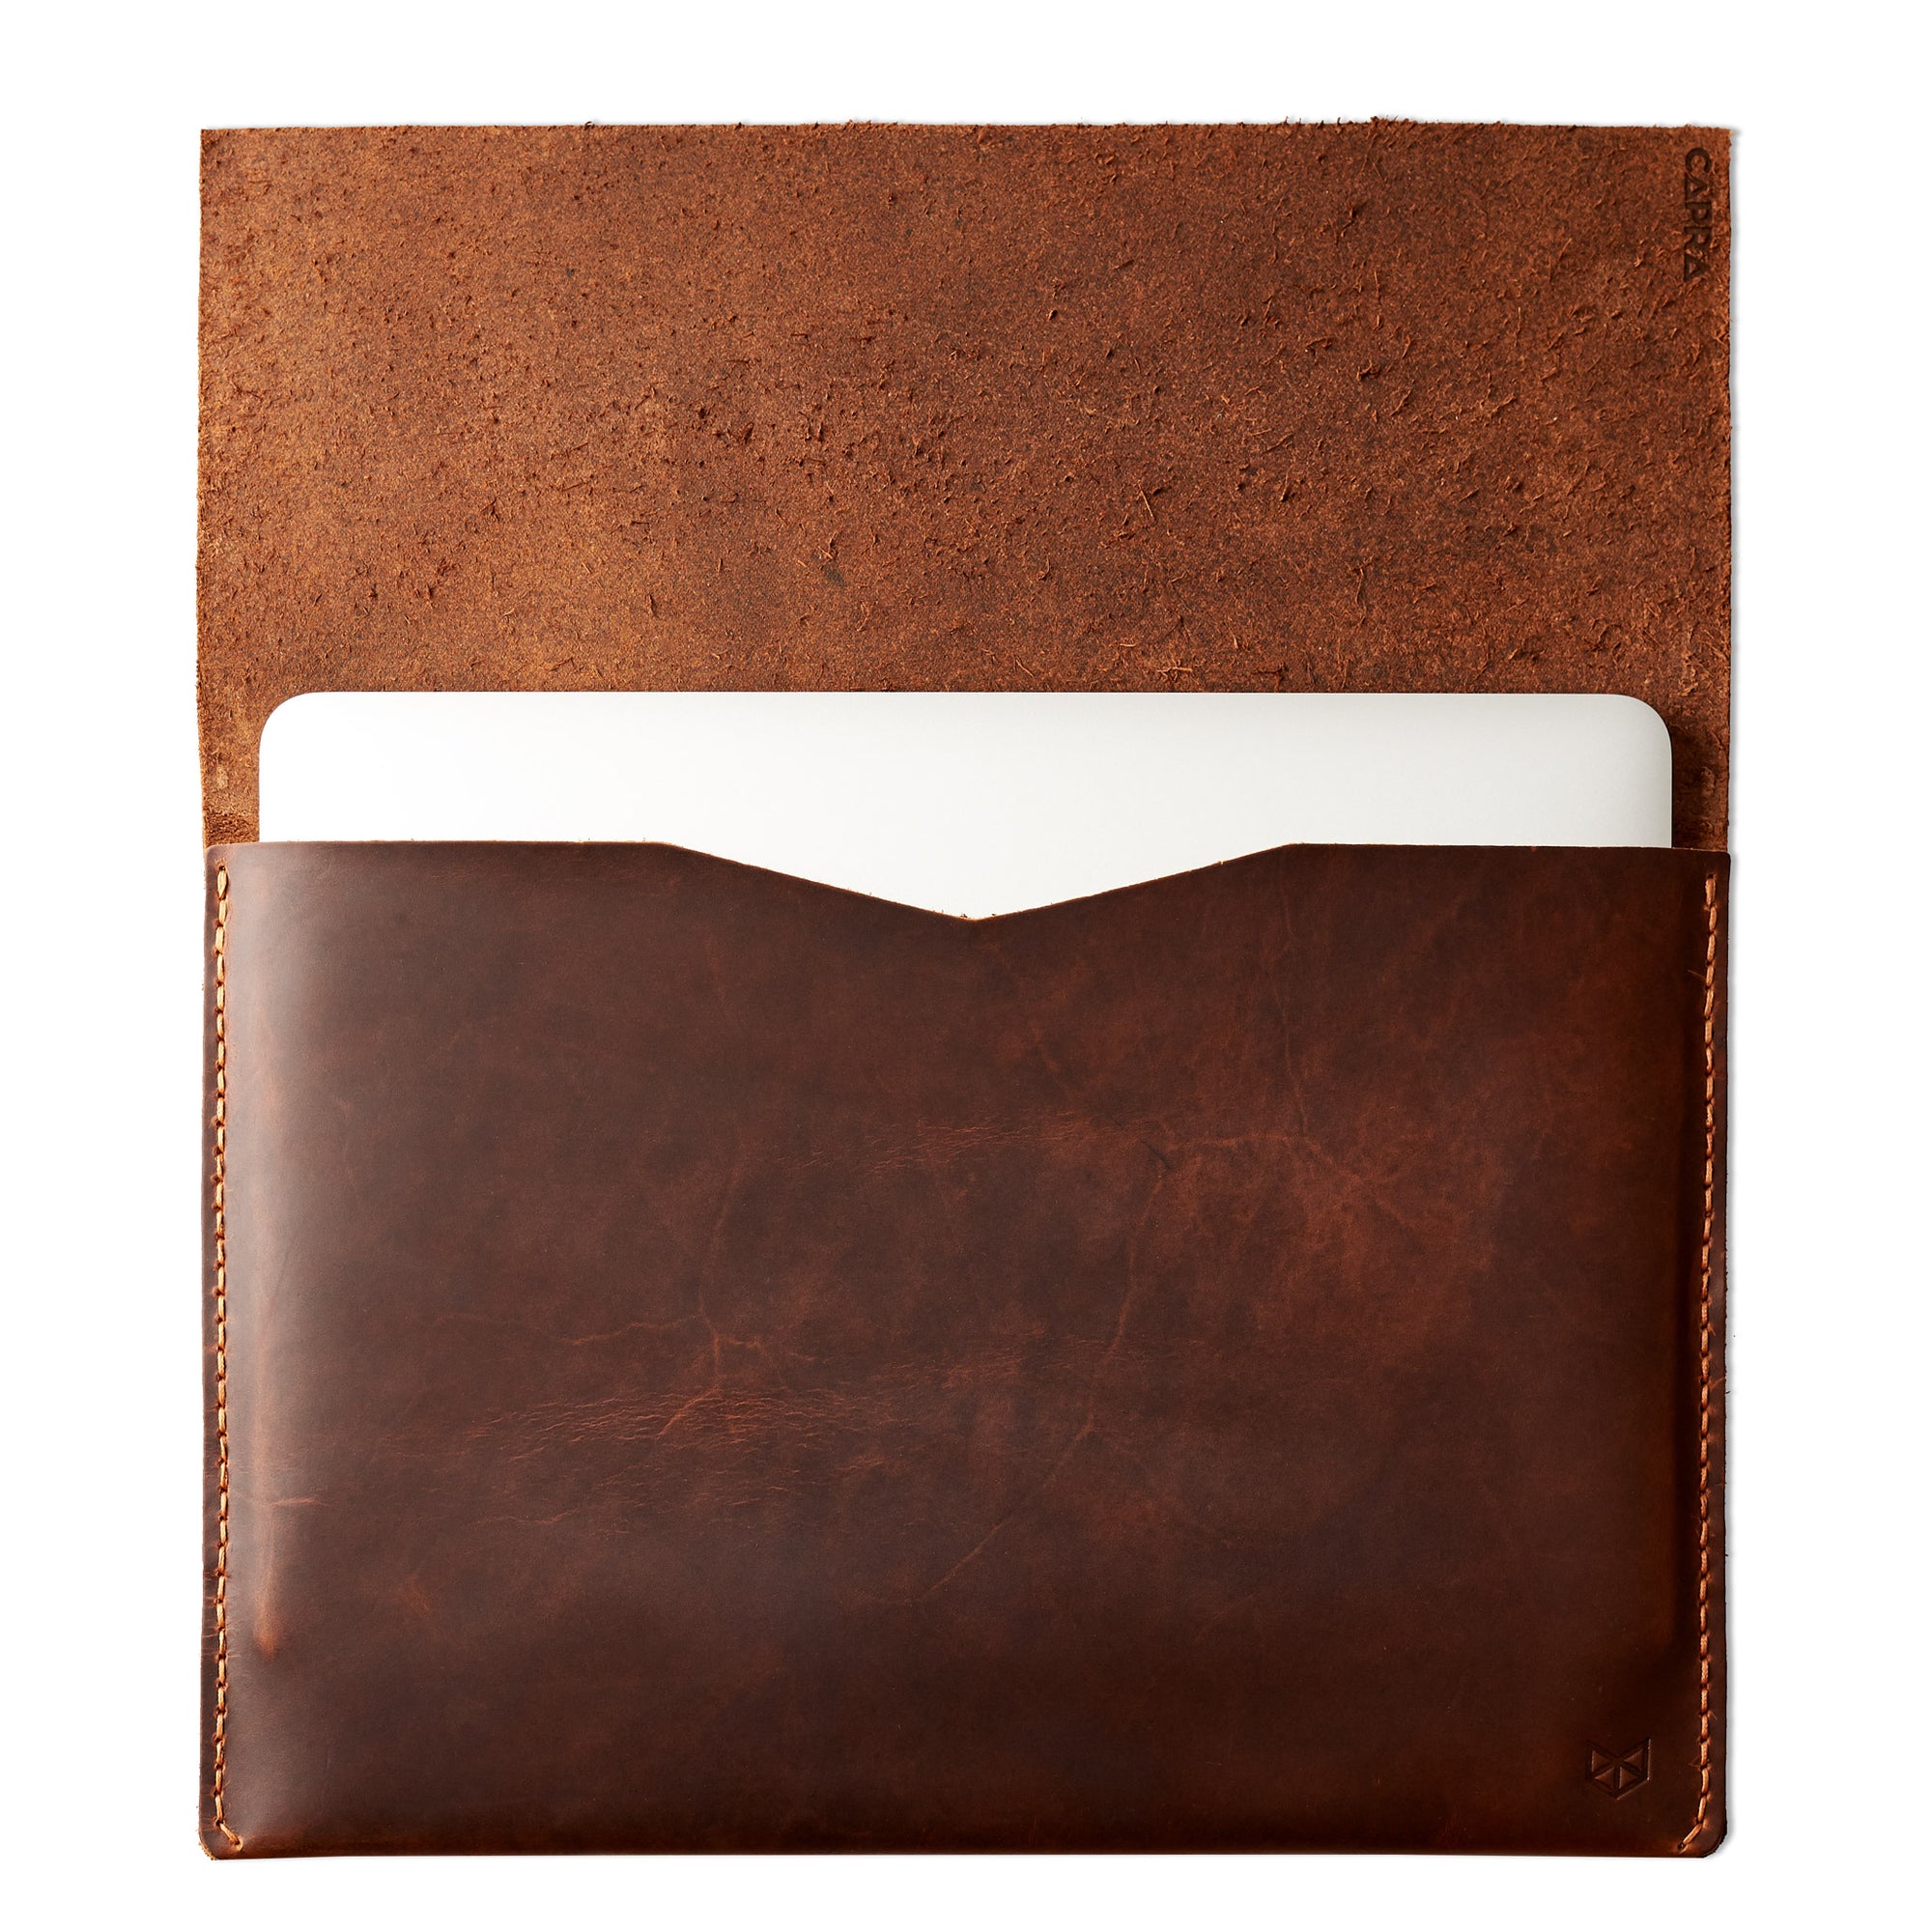 Soft interior tan case. Leather Lenovo Yoga Sleeve Case by Capra Leather